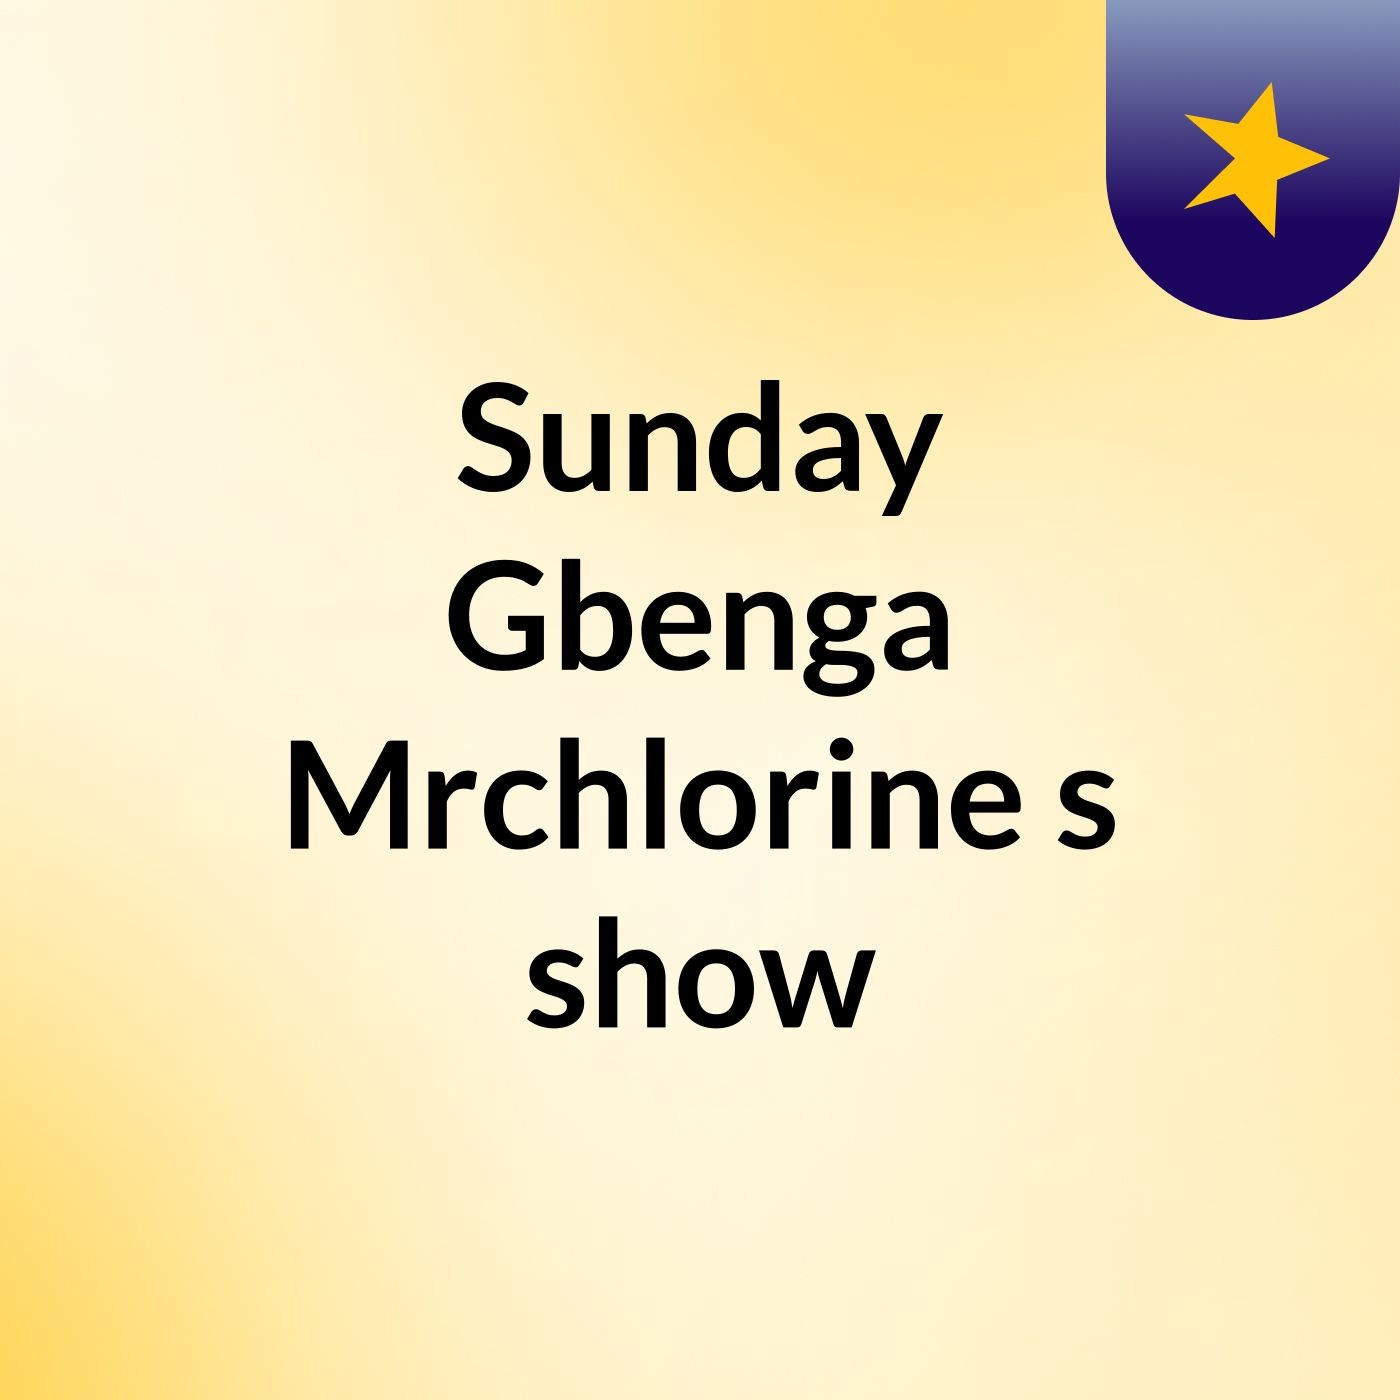 Sunday Gbenga Mrchlorine's show